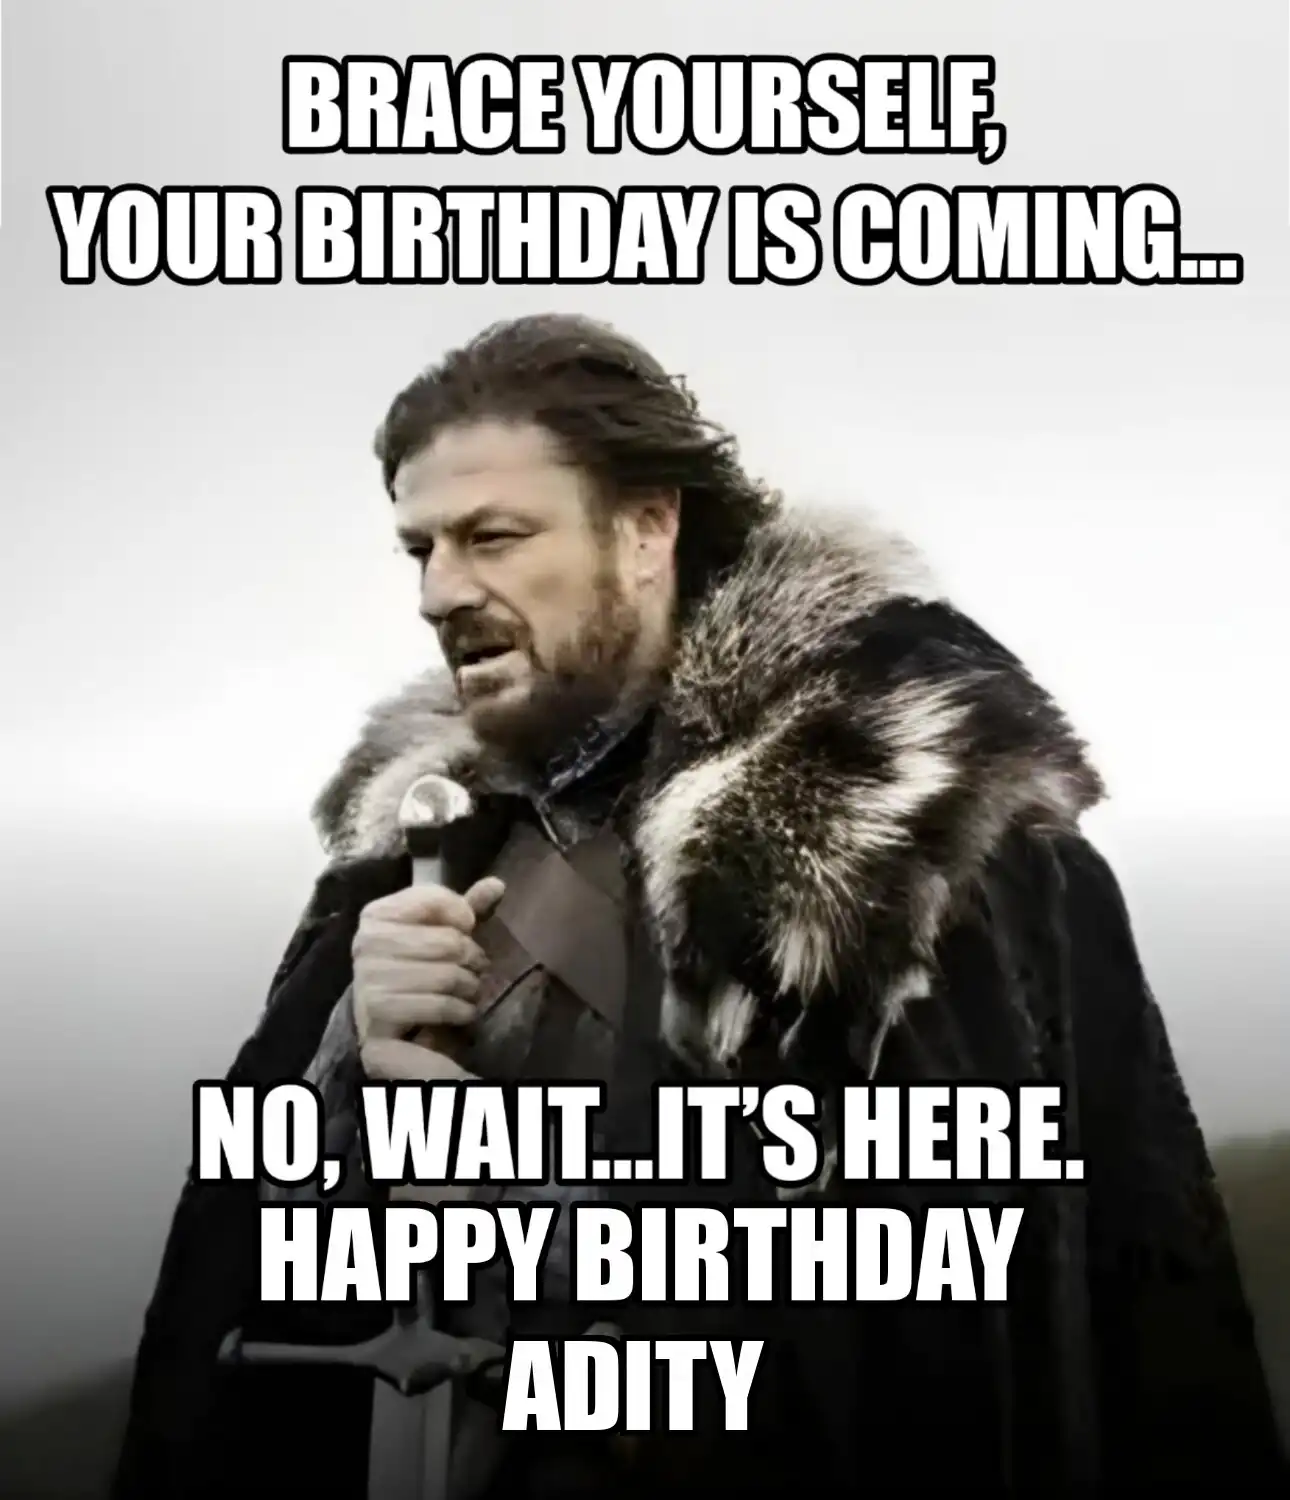 Happy Birthday Adity Brace Yourself Your Birthday Is Coming Meme